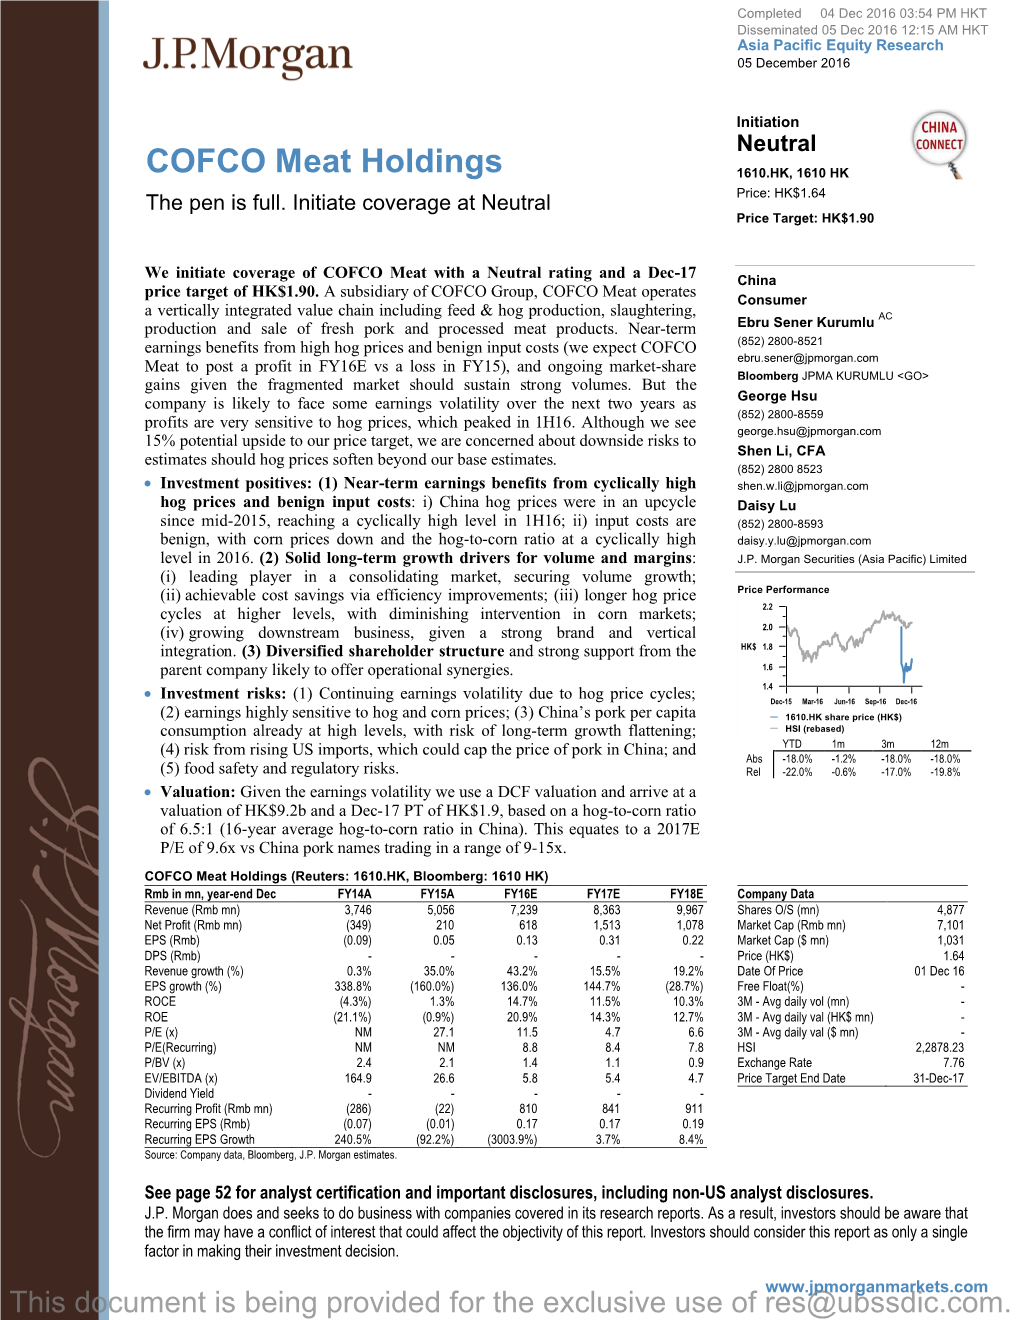 COFCO Meat Holdings 1610.HK, 1610 HK the Pen Is Full